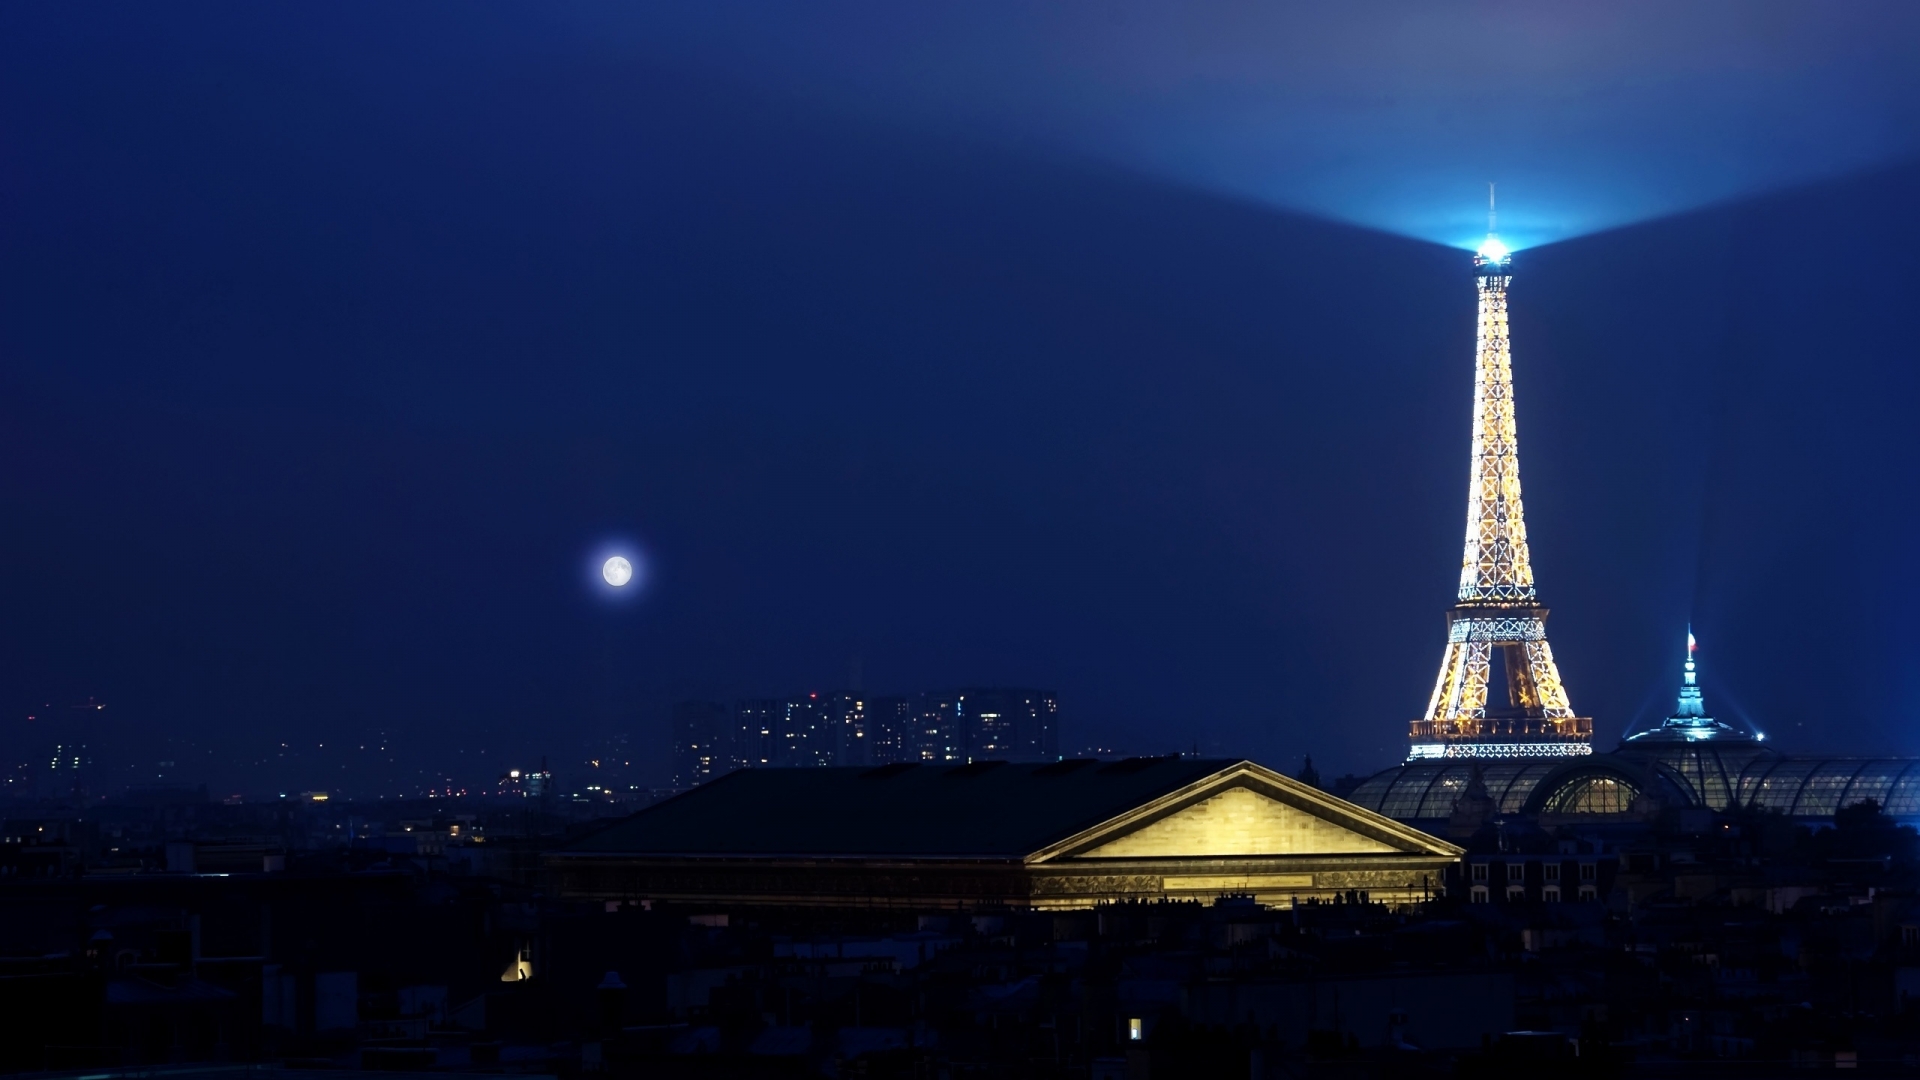 Eiffel Tower Light for 1920 x 1080 HDTV 1080p resolution